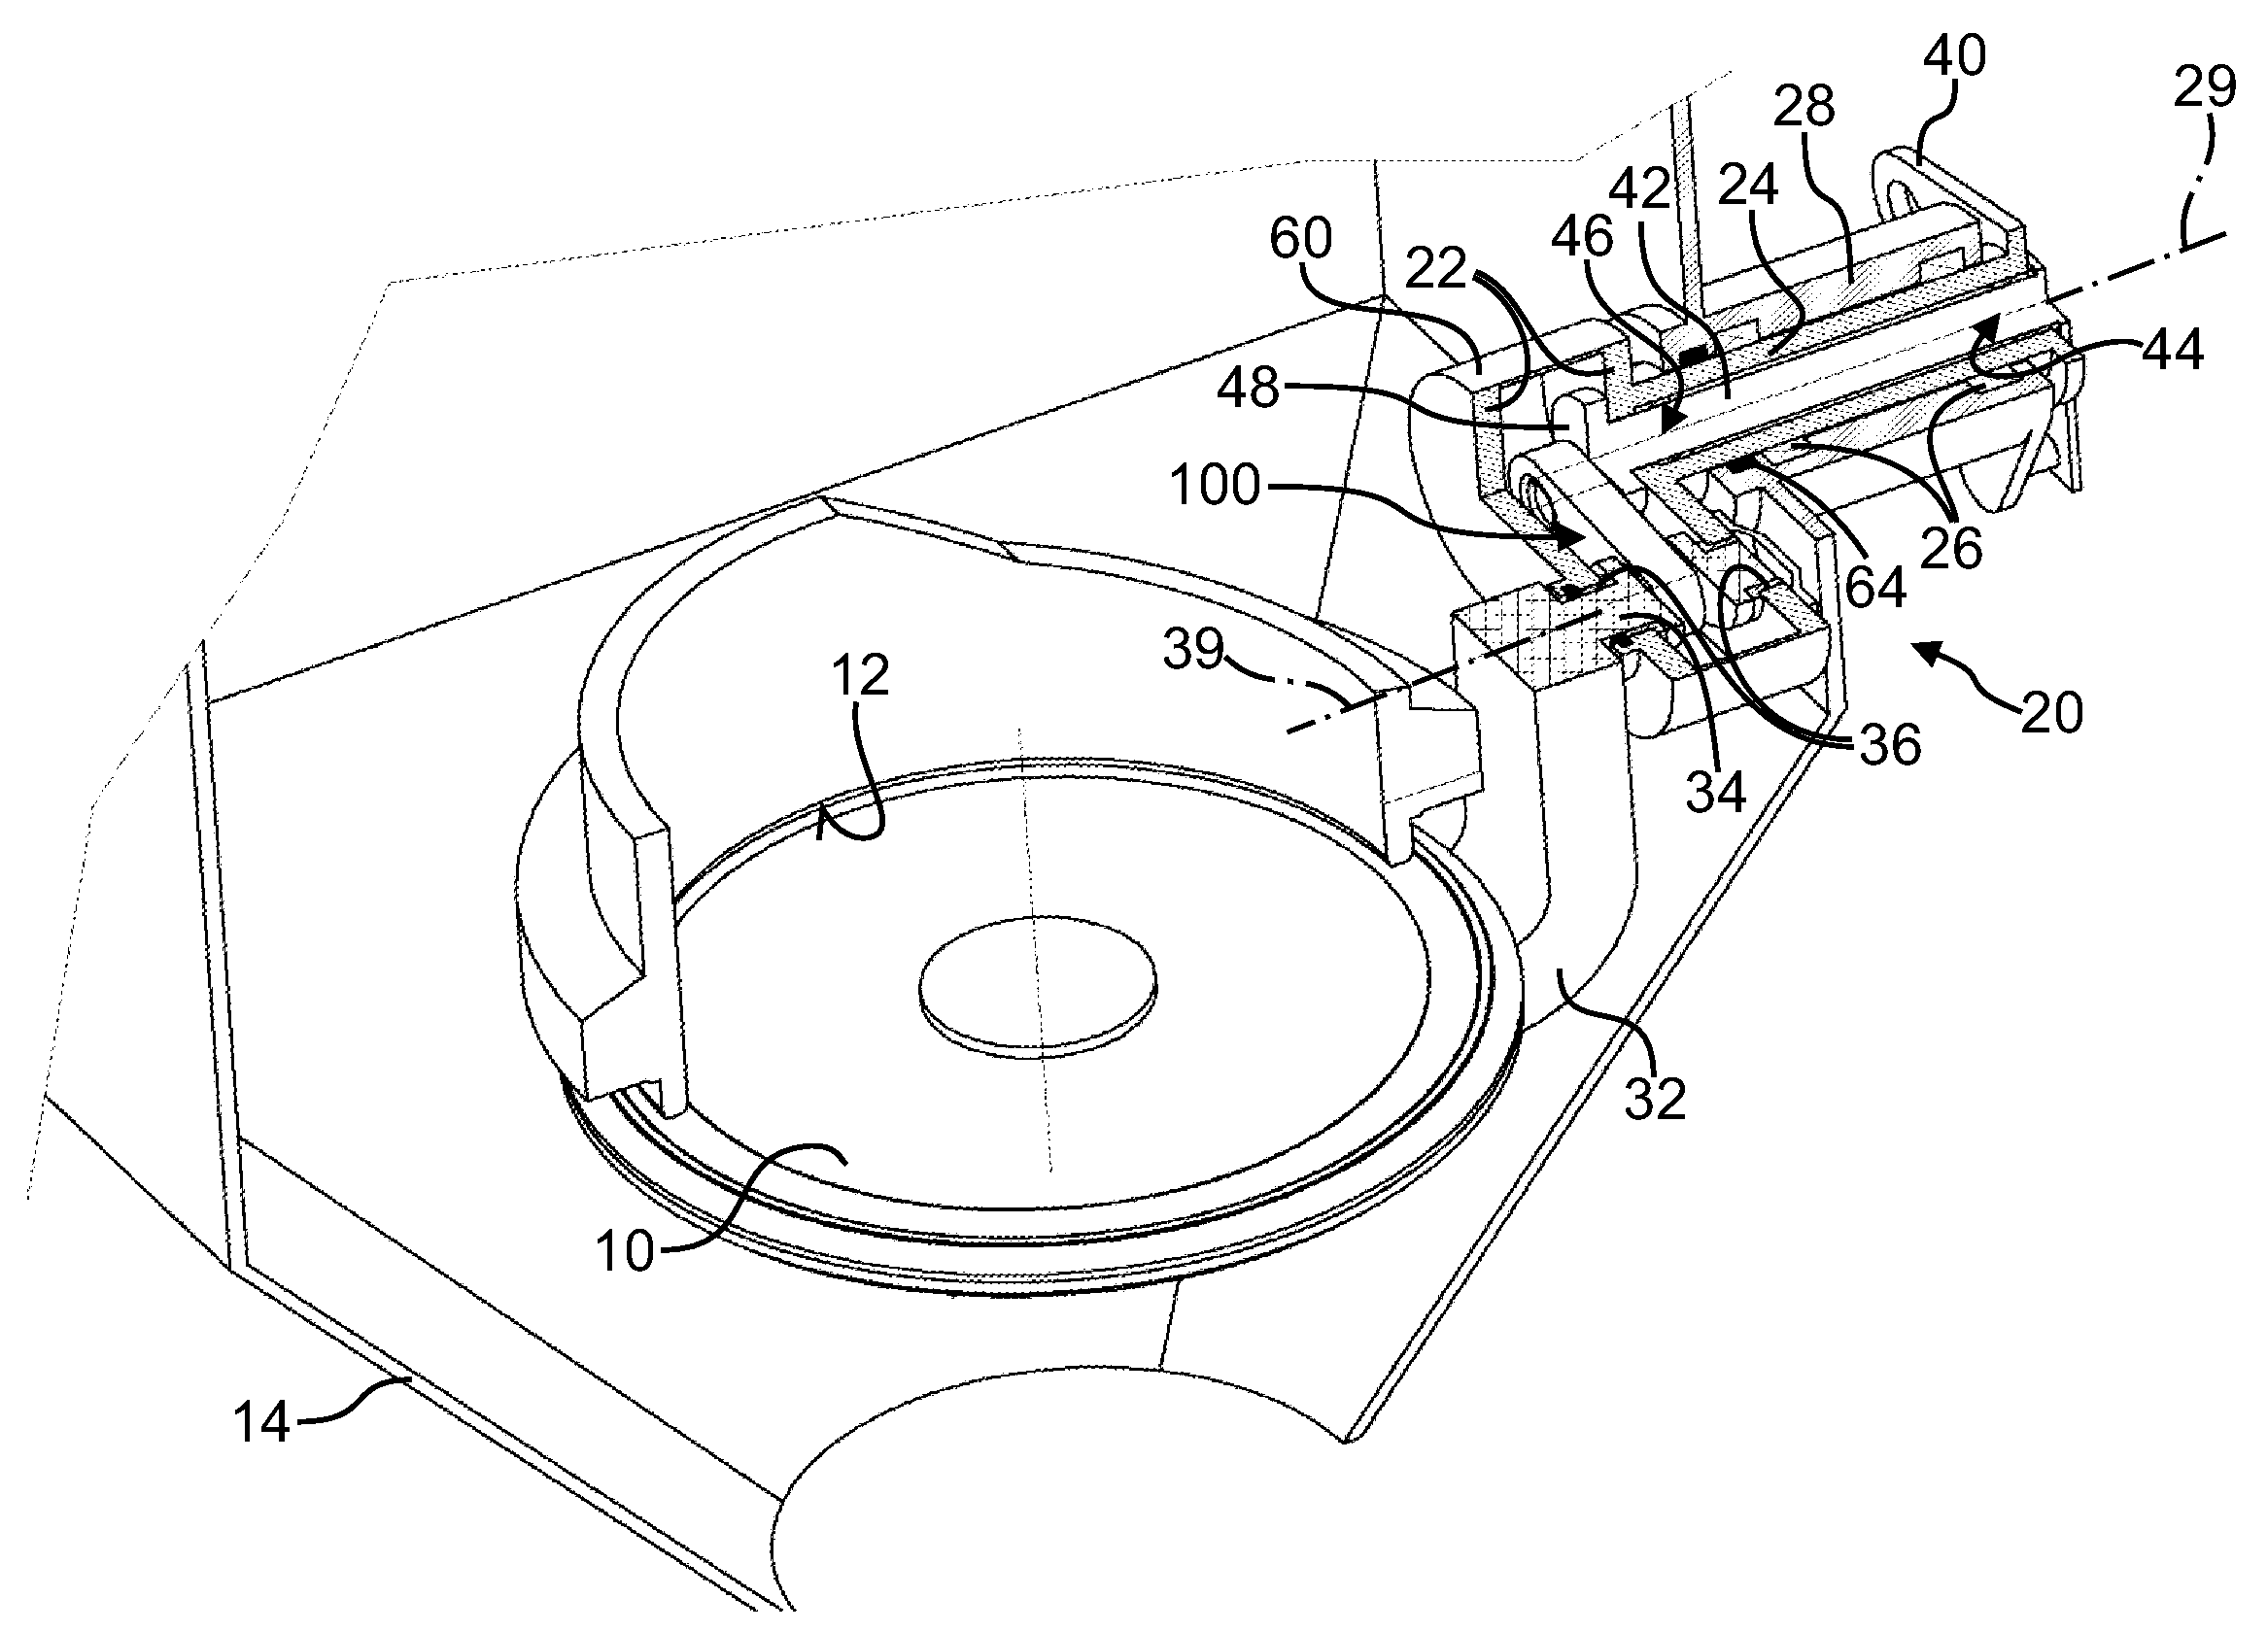 Sealing valve arrangement for a shaft furnace charging installation